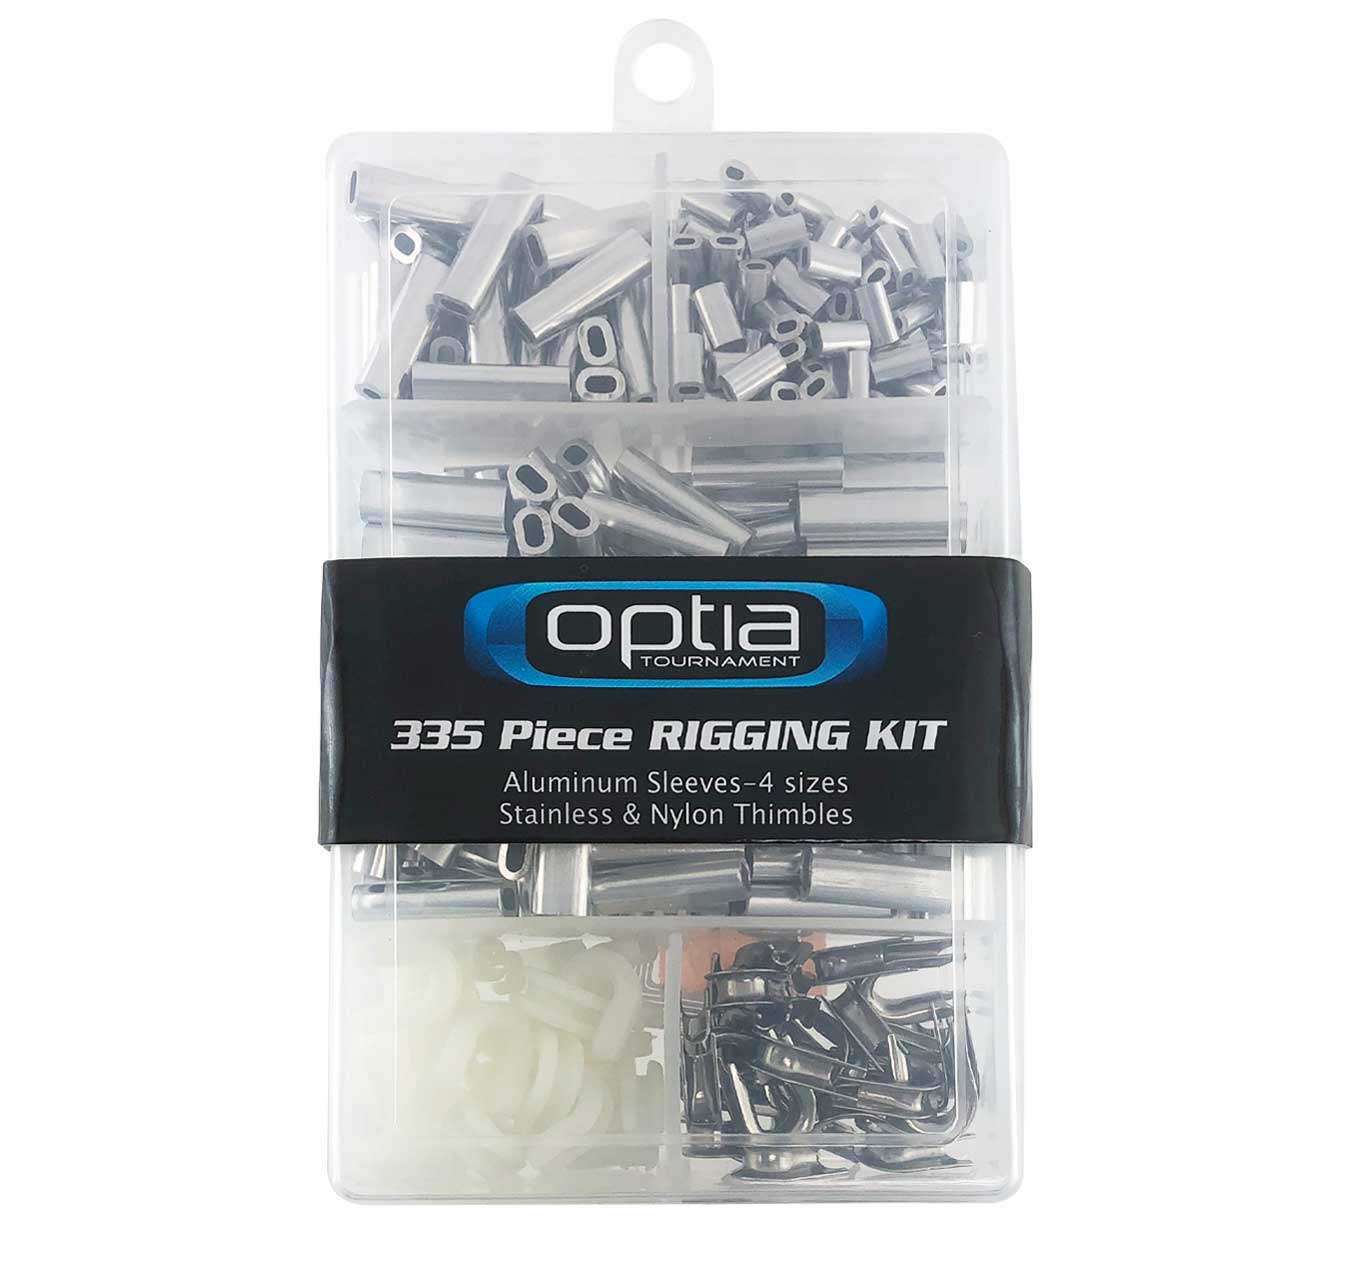 Optia 335 Piece Rigging Kit